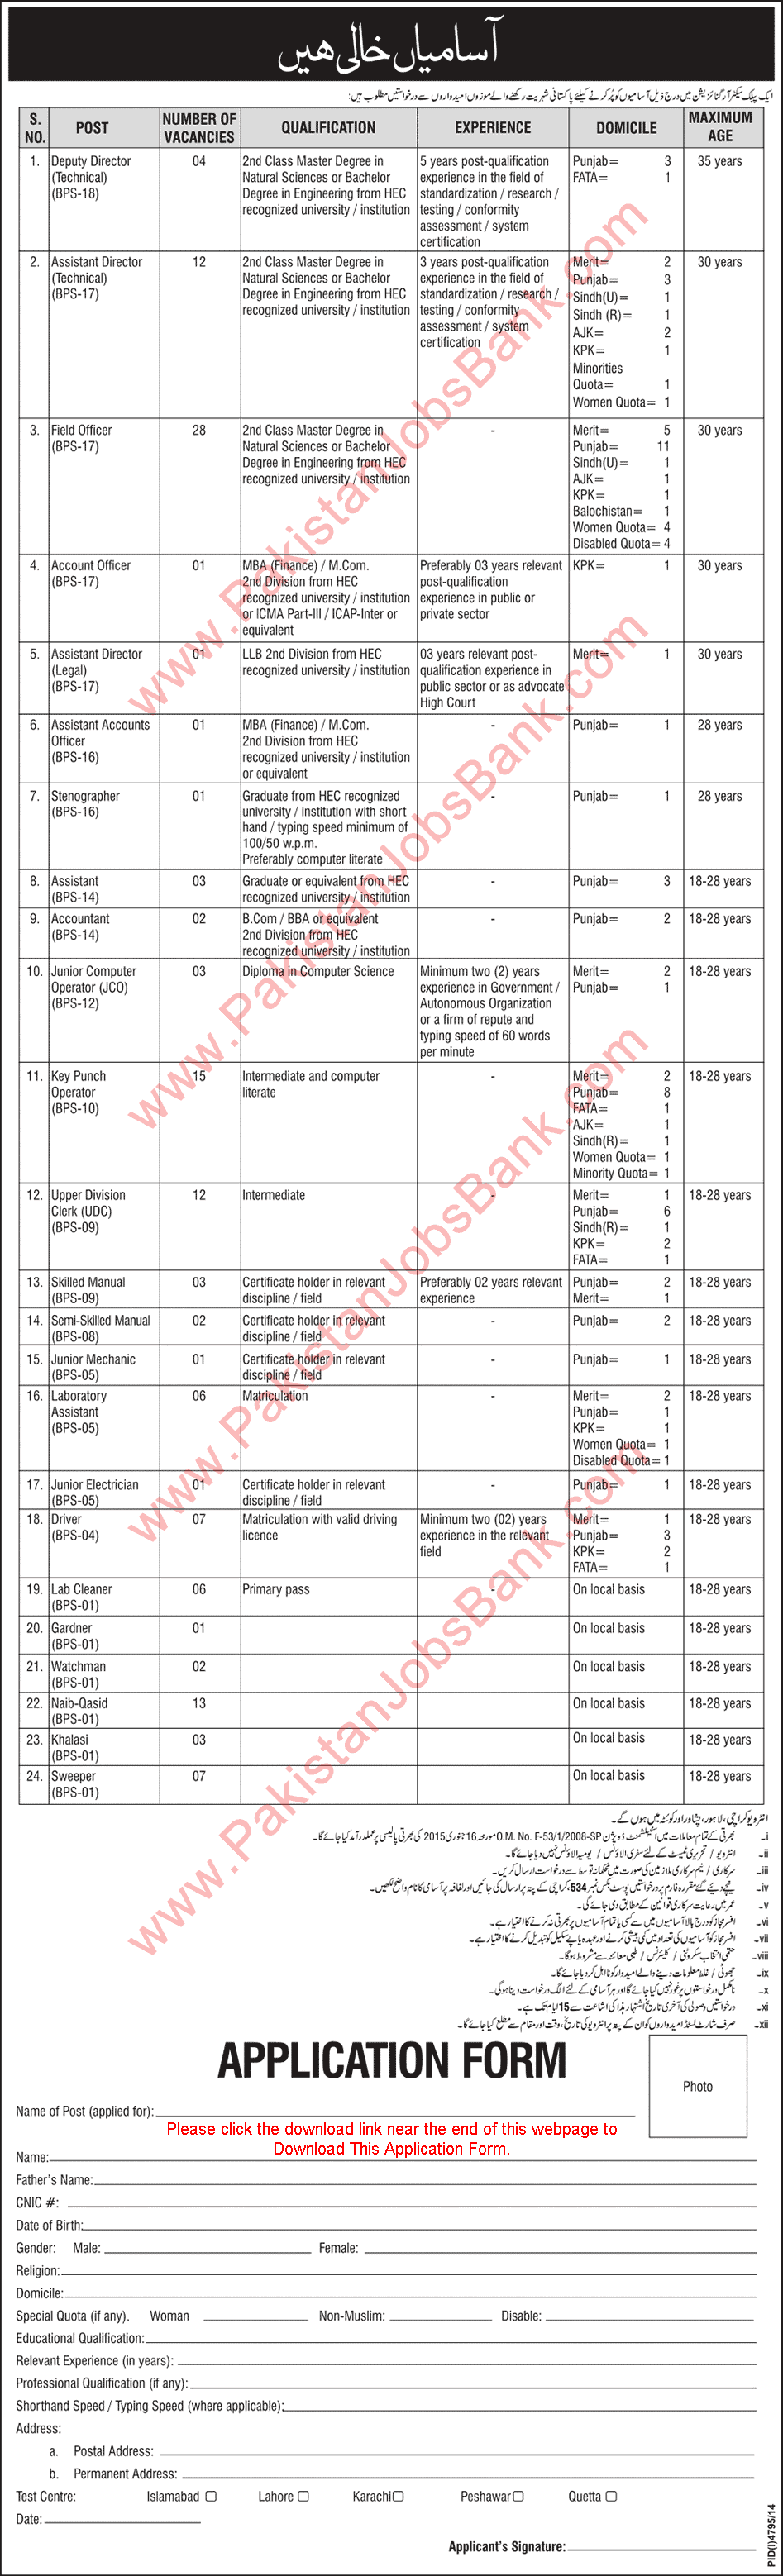 PO Box 534 Karachi Jobs 2015 March Application Form Download PNAC Latest